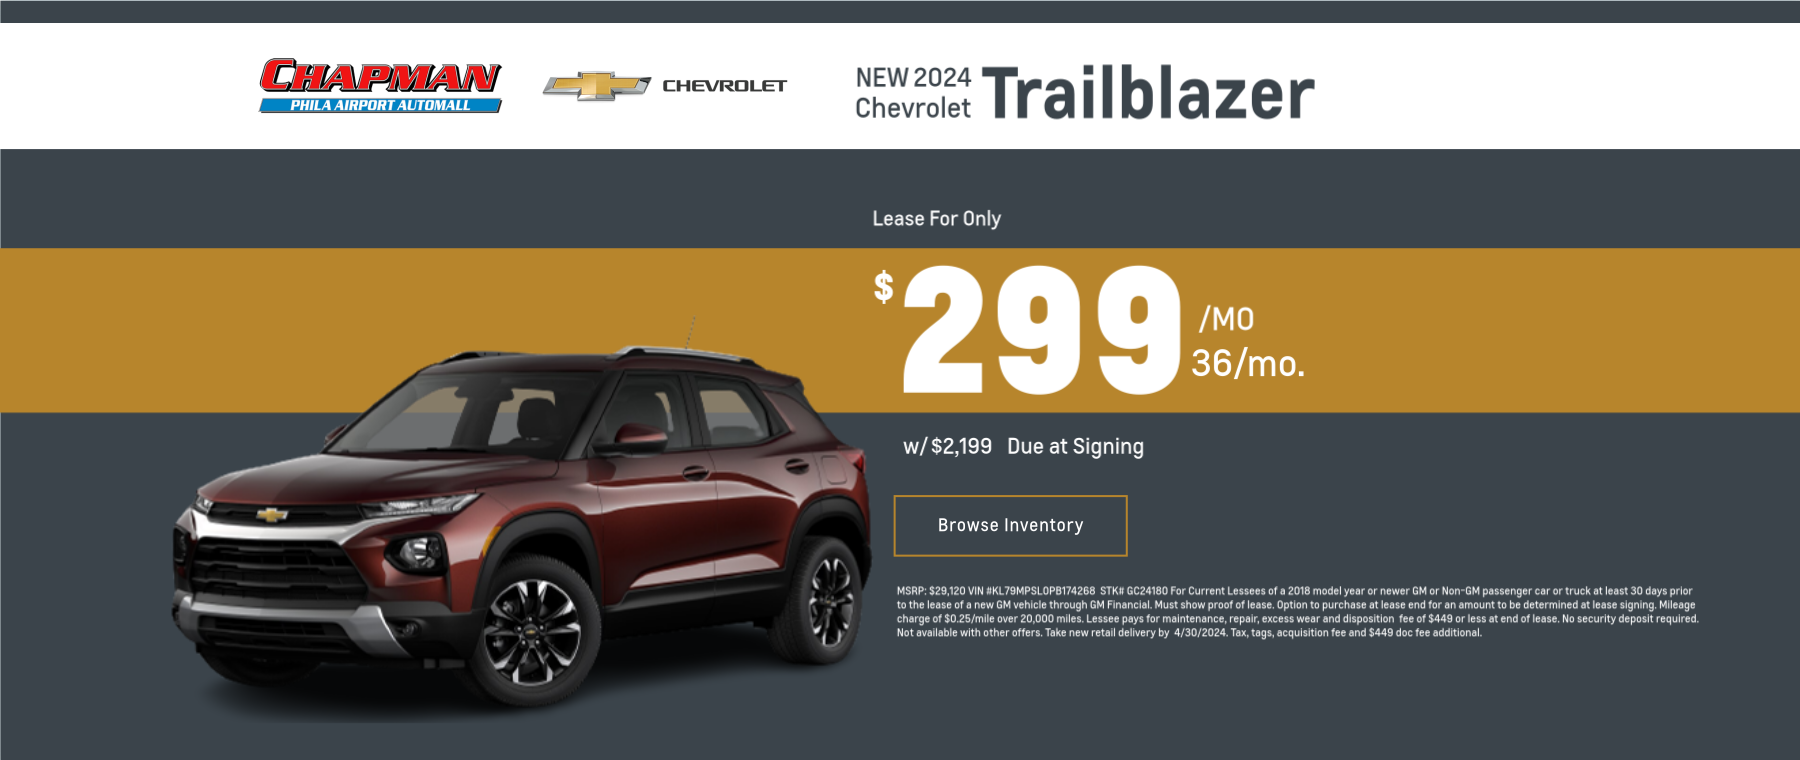 New Chevrolet Trailblazer Offer